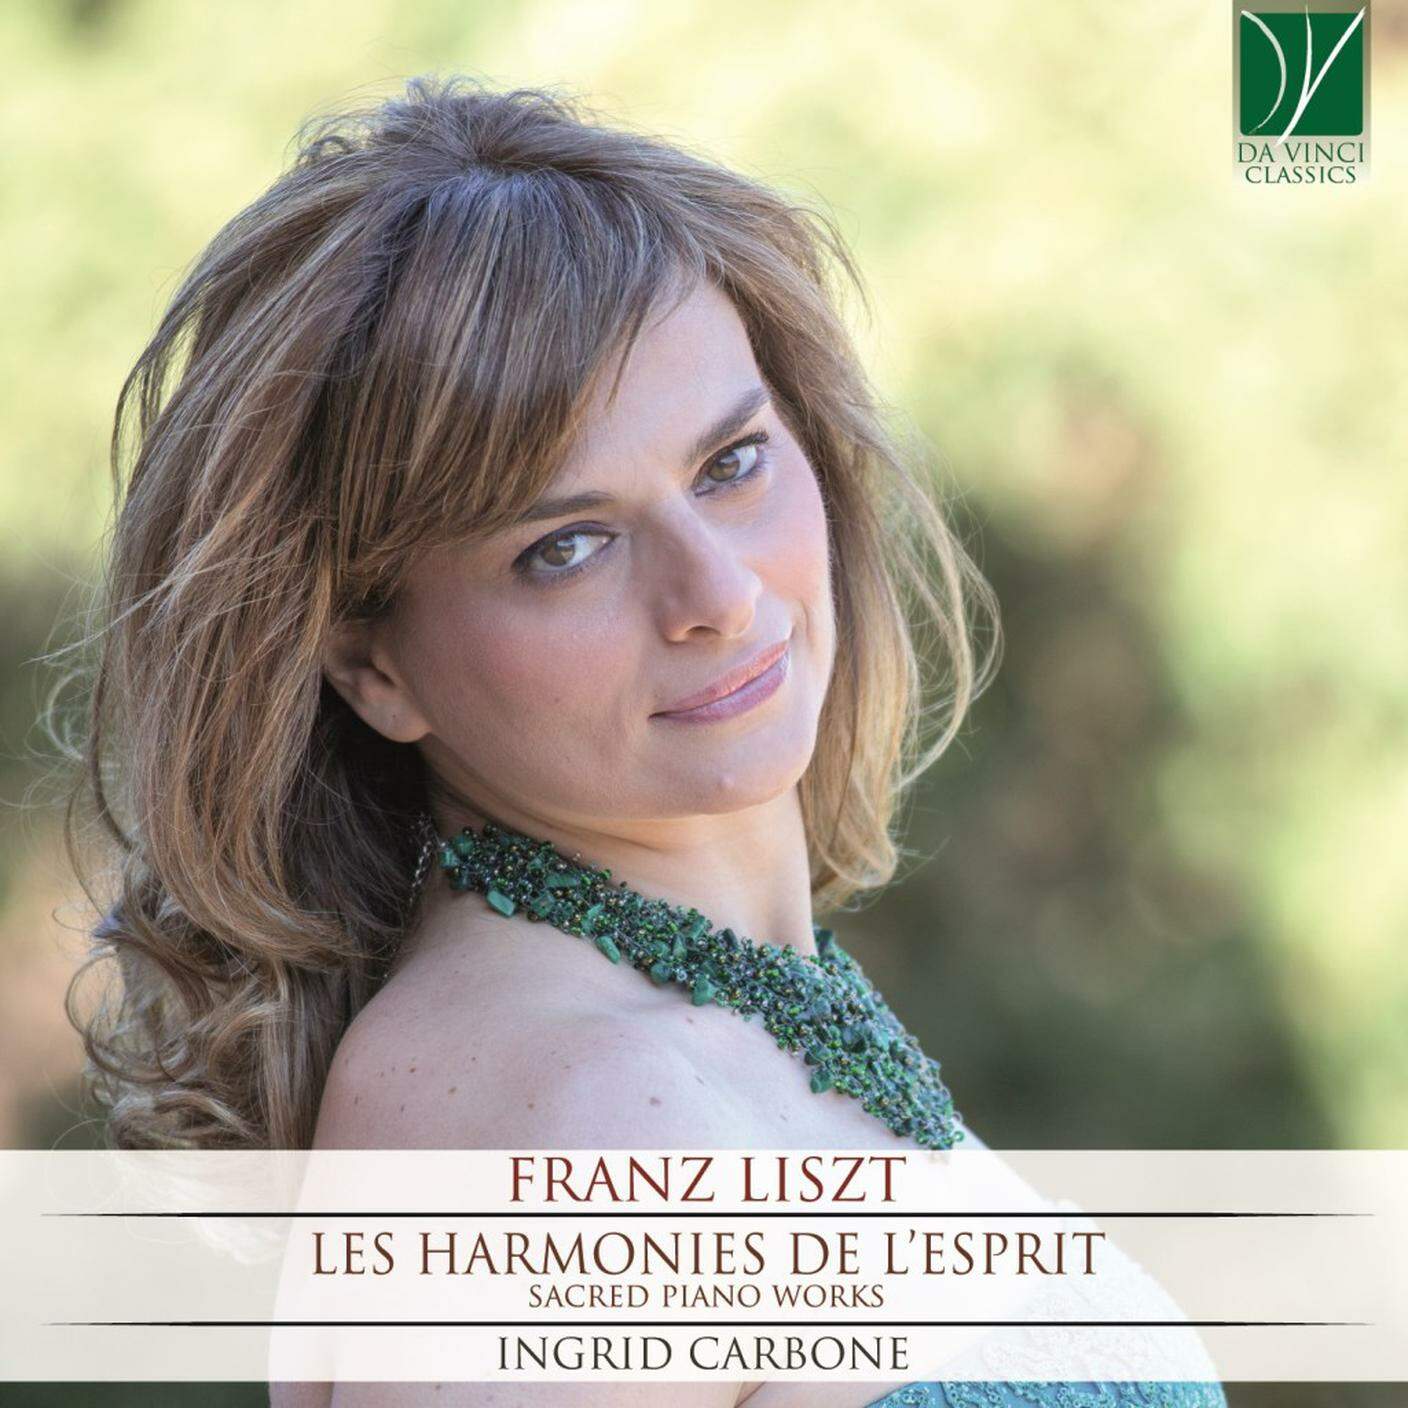 Ingrid Carbone, "Franz Liszt", Da Vinci Classic